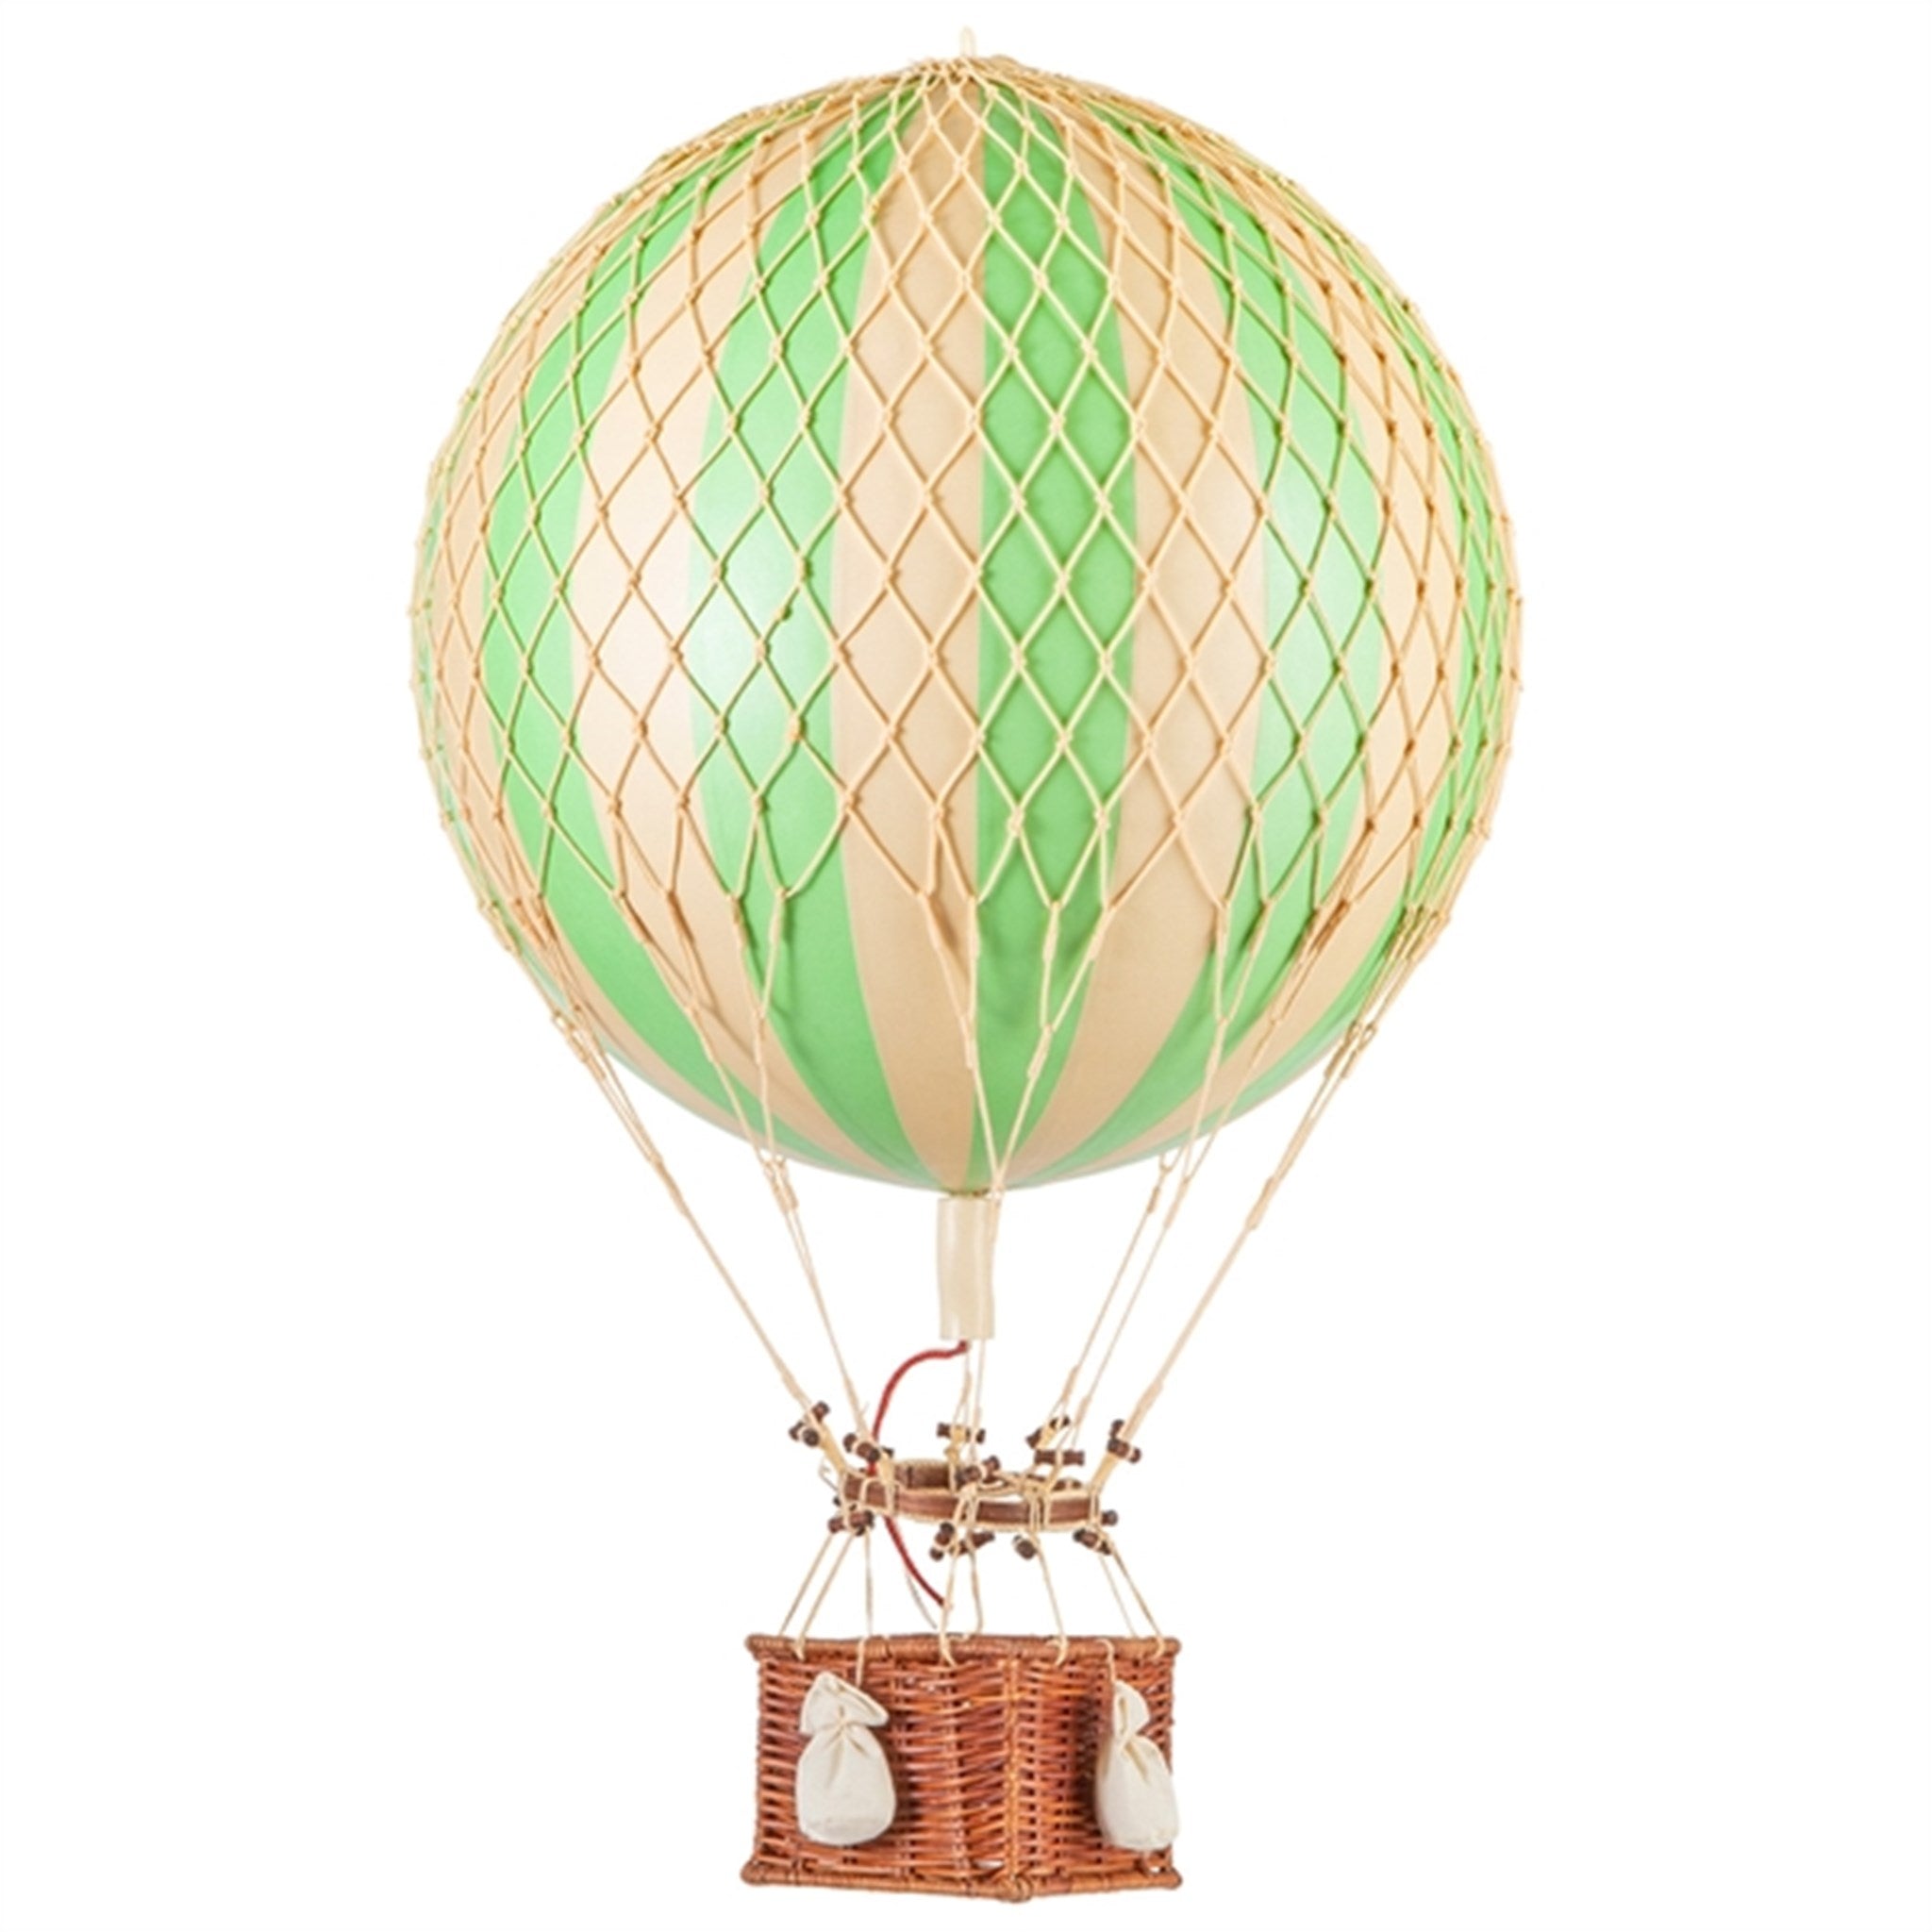 Authentic Models Balloon True Green 32 cm